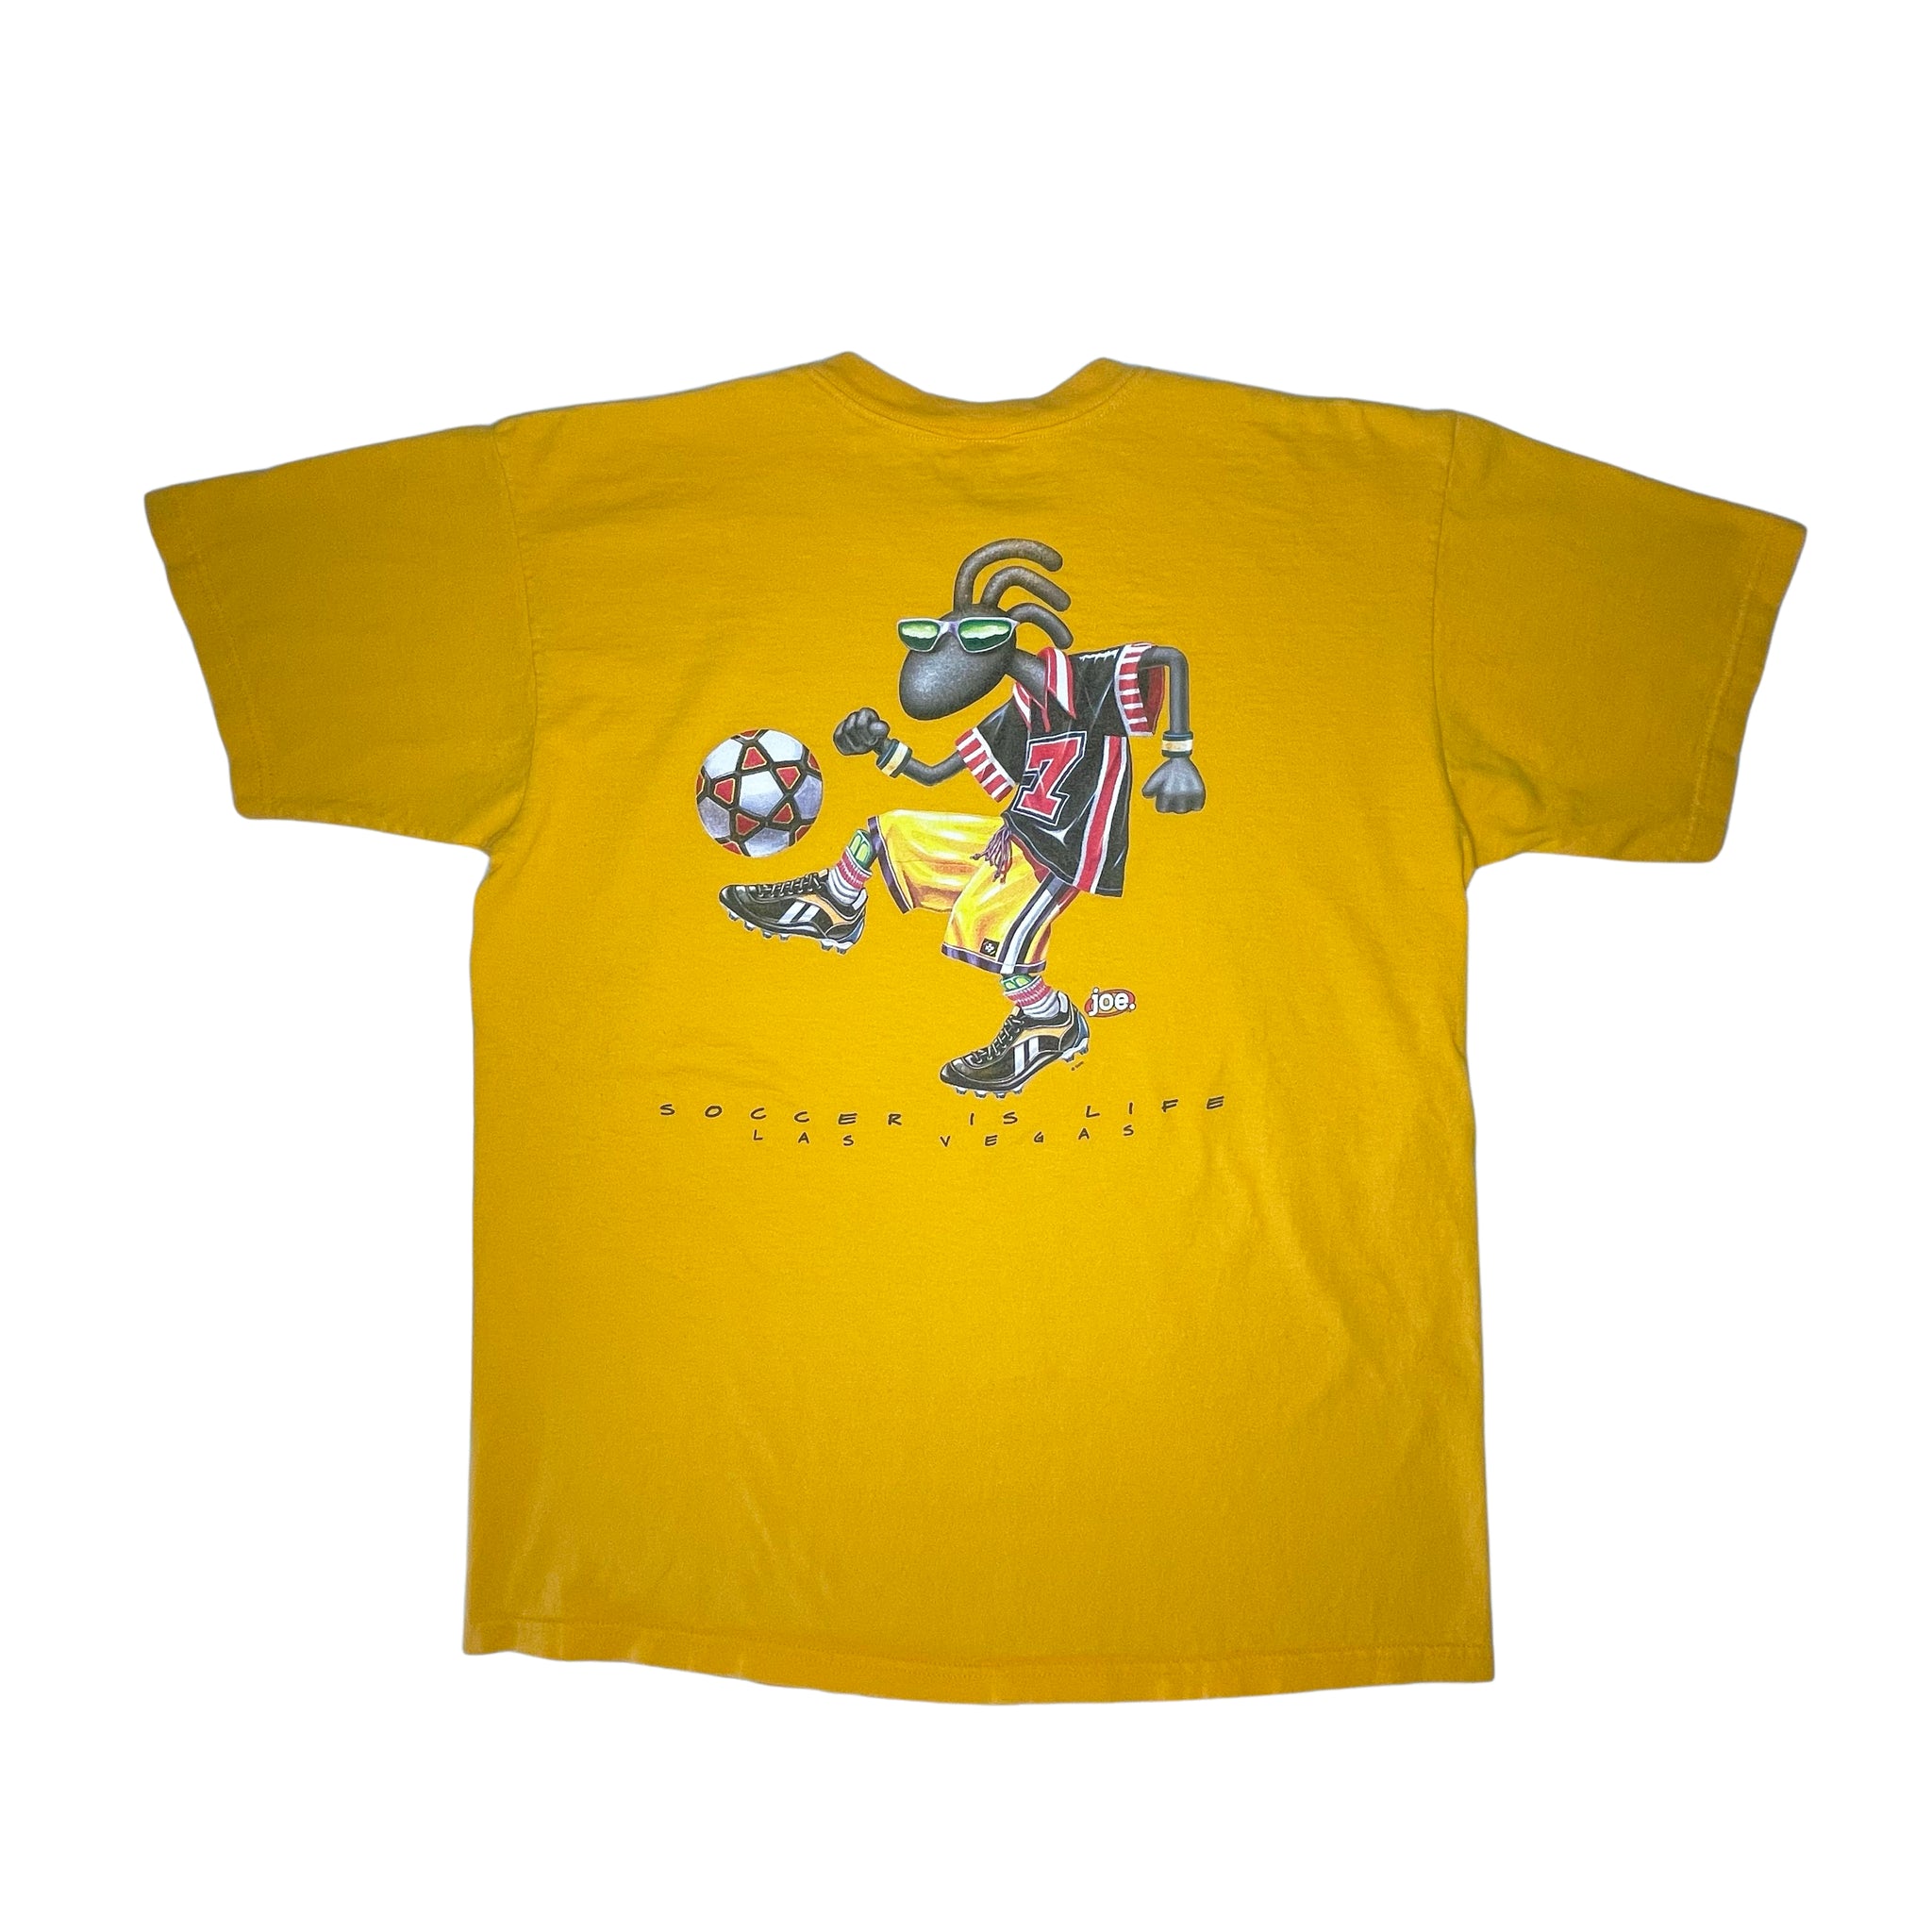 Joe Soccer Is Life Graphic T-Shirt - L